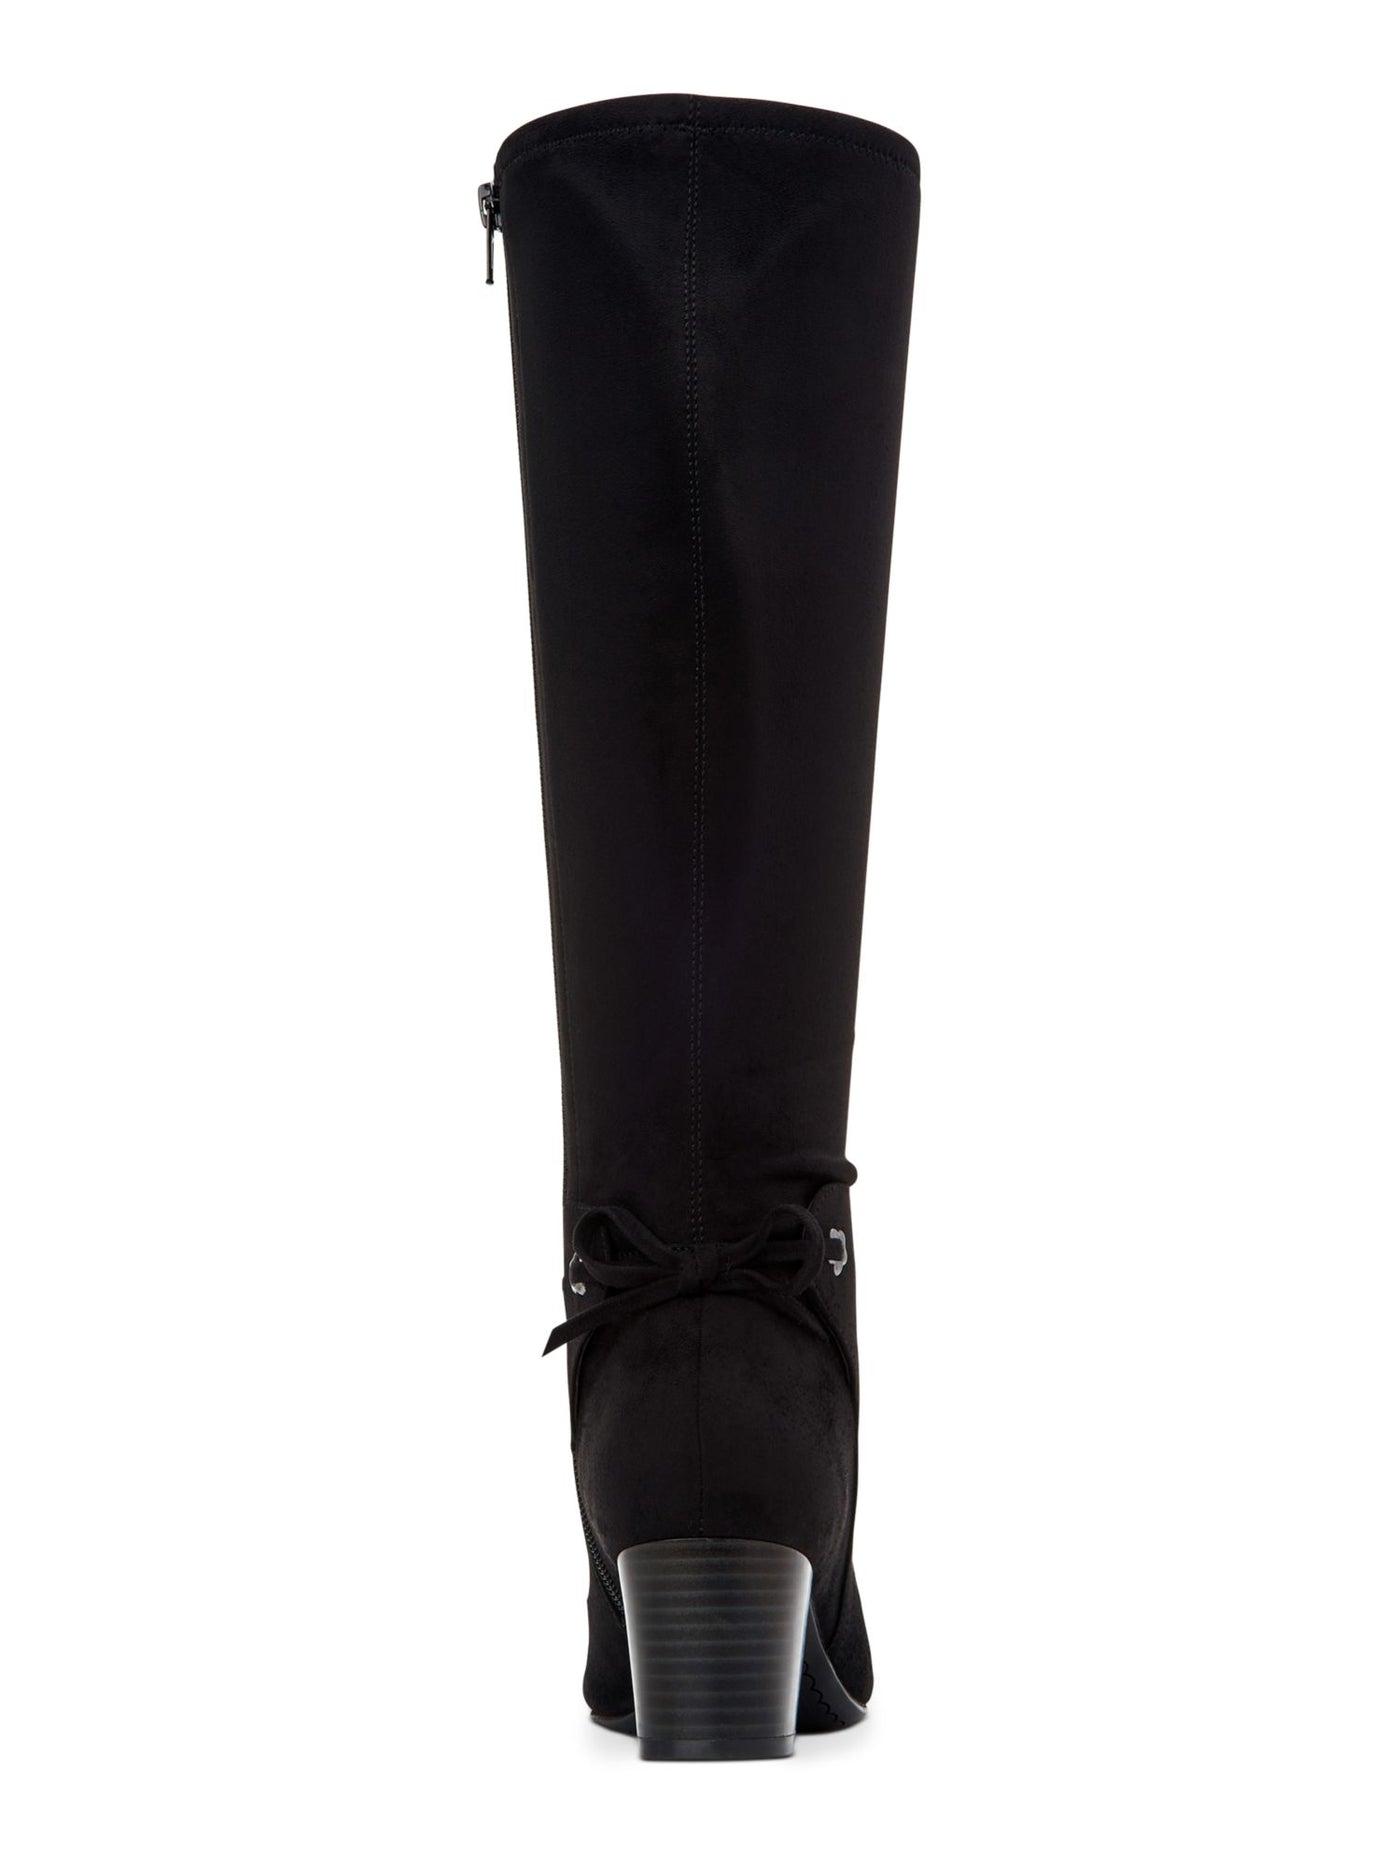 CHARTER CLUB Womens Black Bow Accent Almond Toe Block Heel Zip-Up Dress Boots 7.5